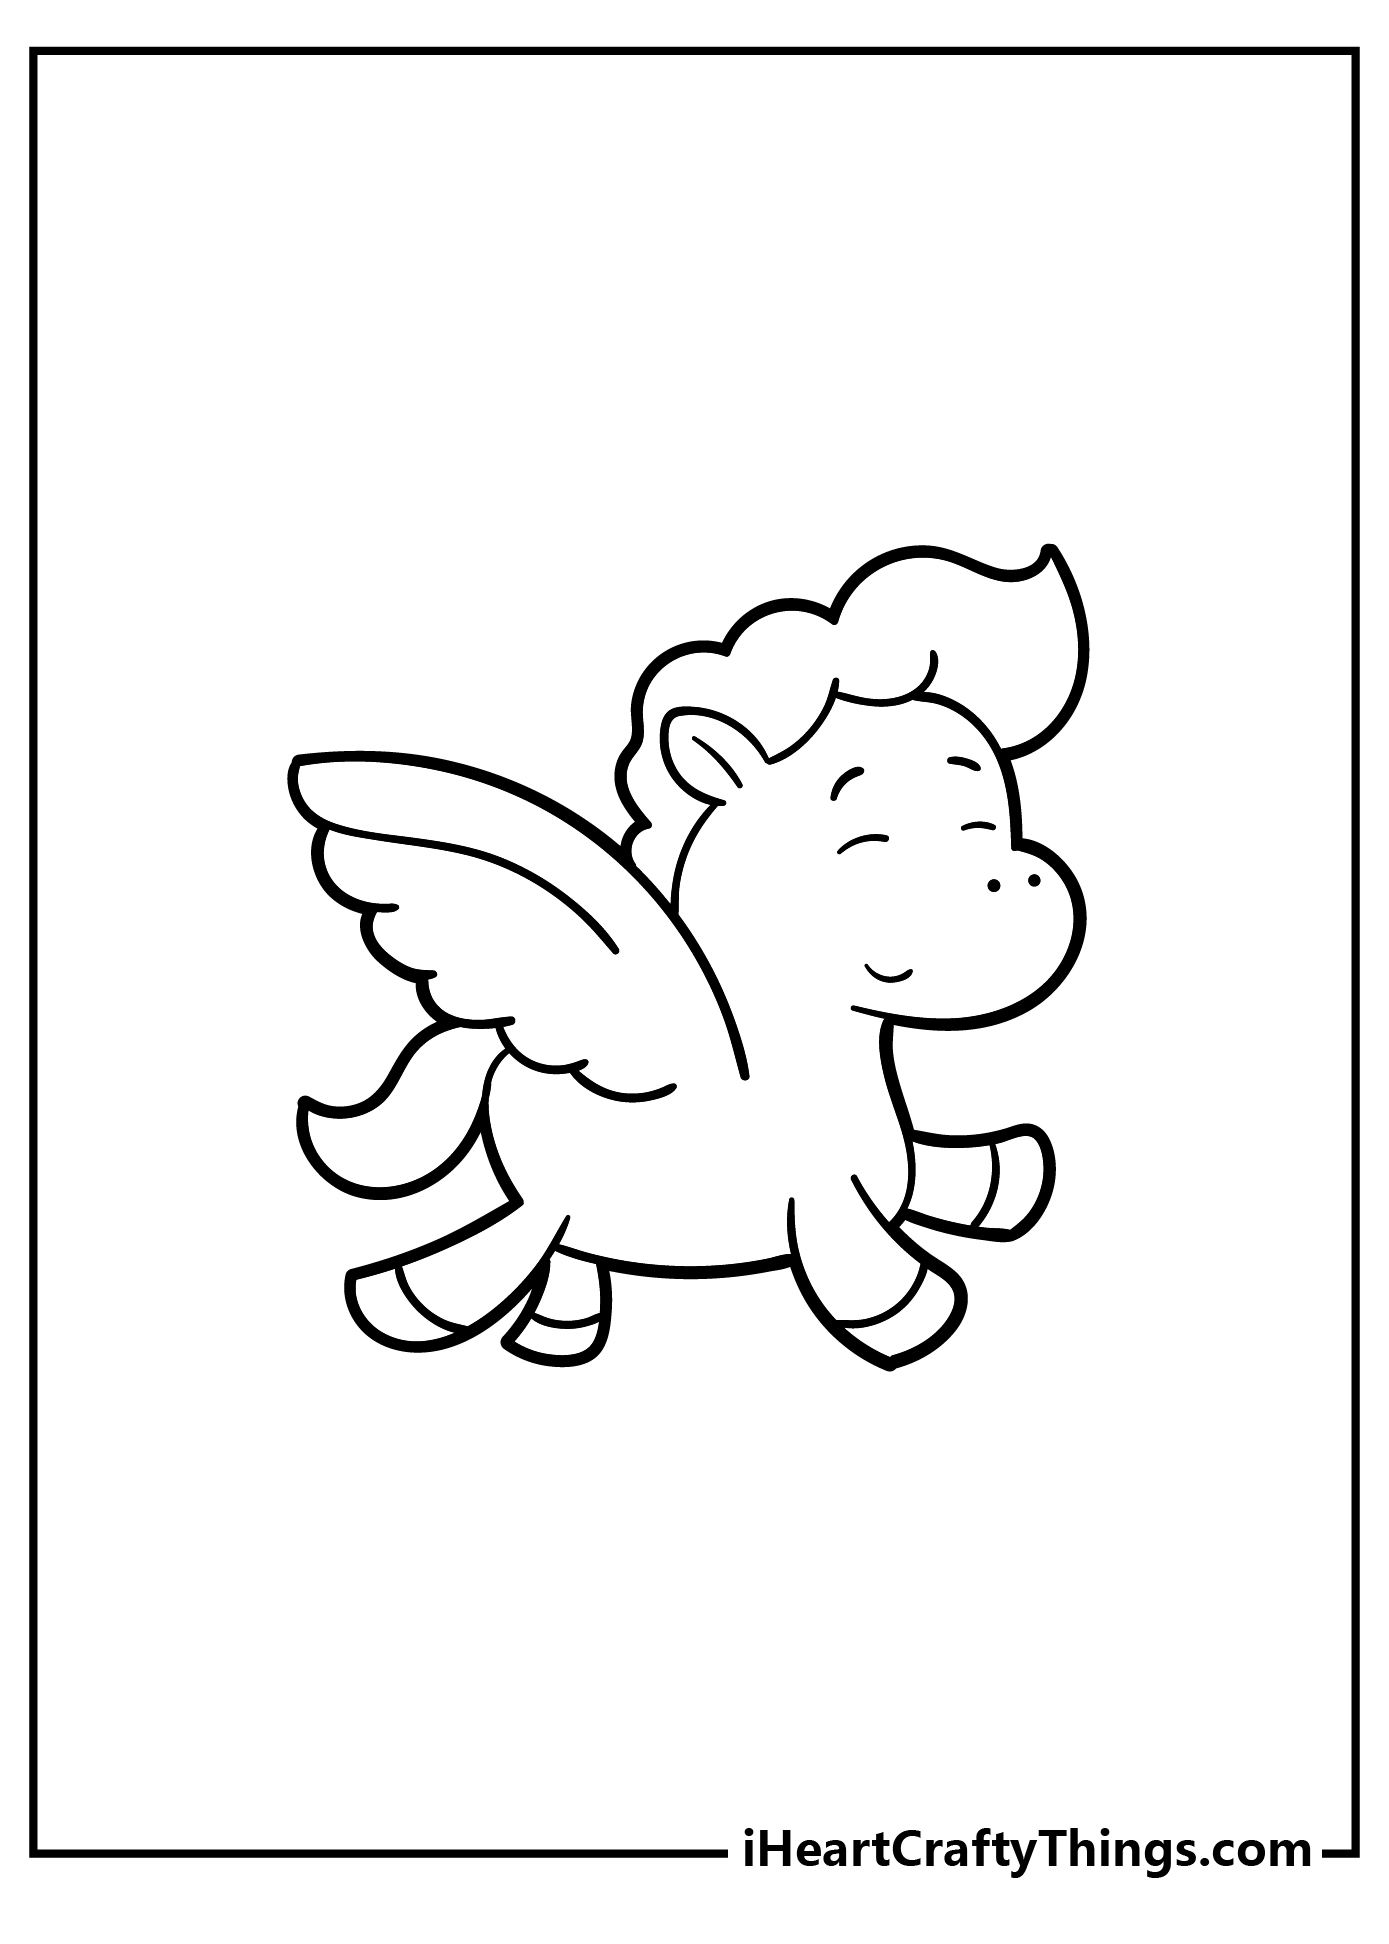 Pegasus Coloring Sheet for children free download